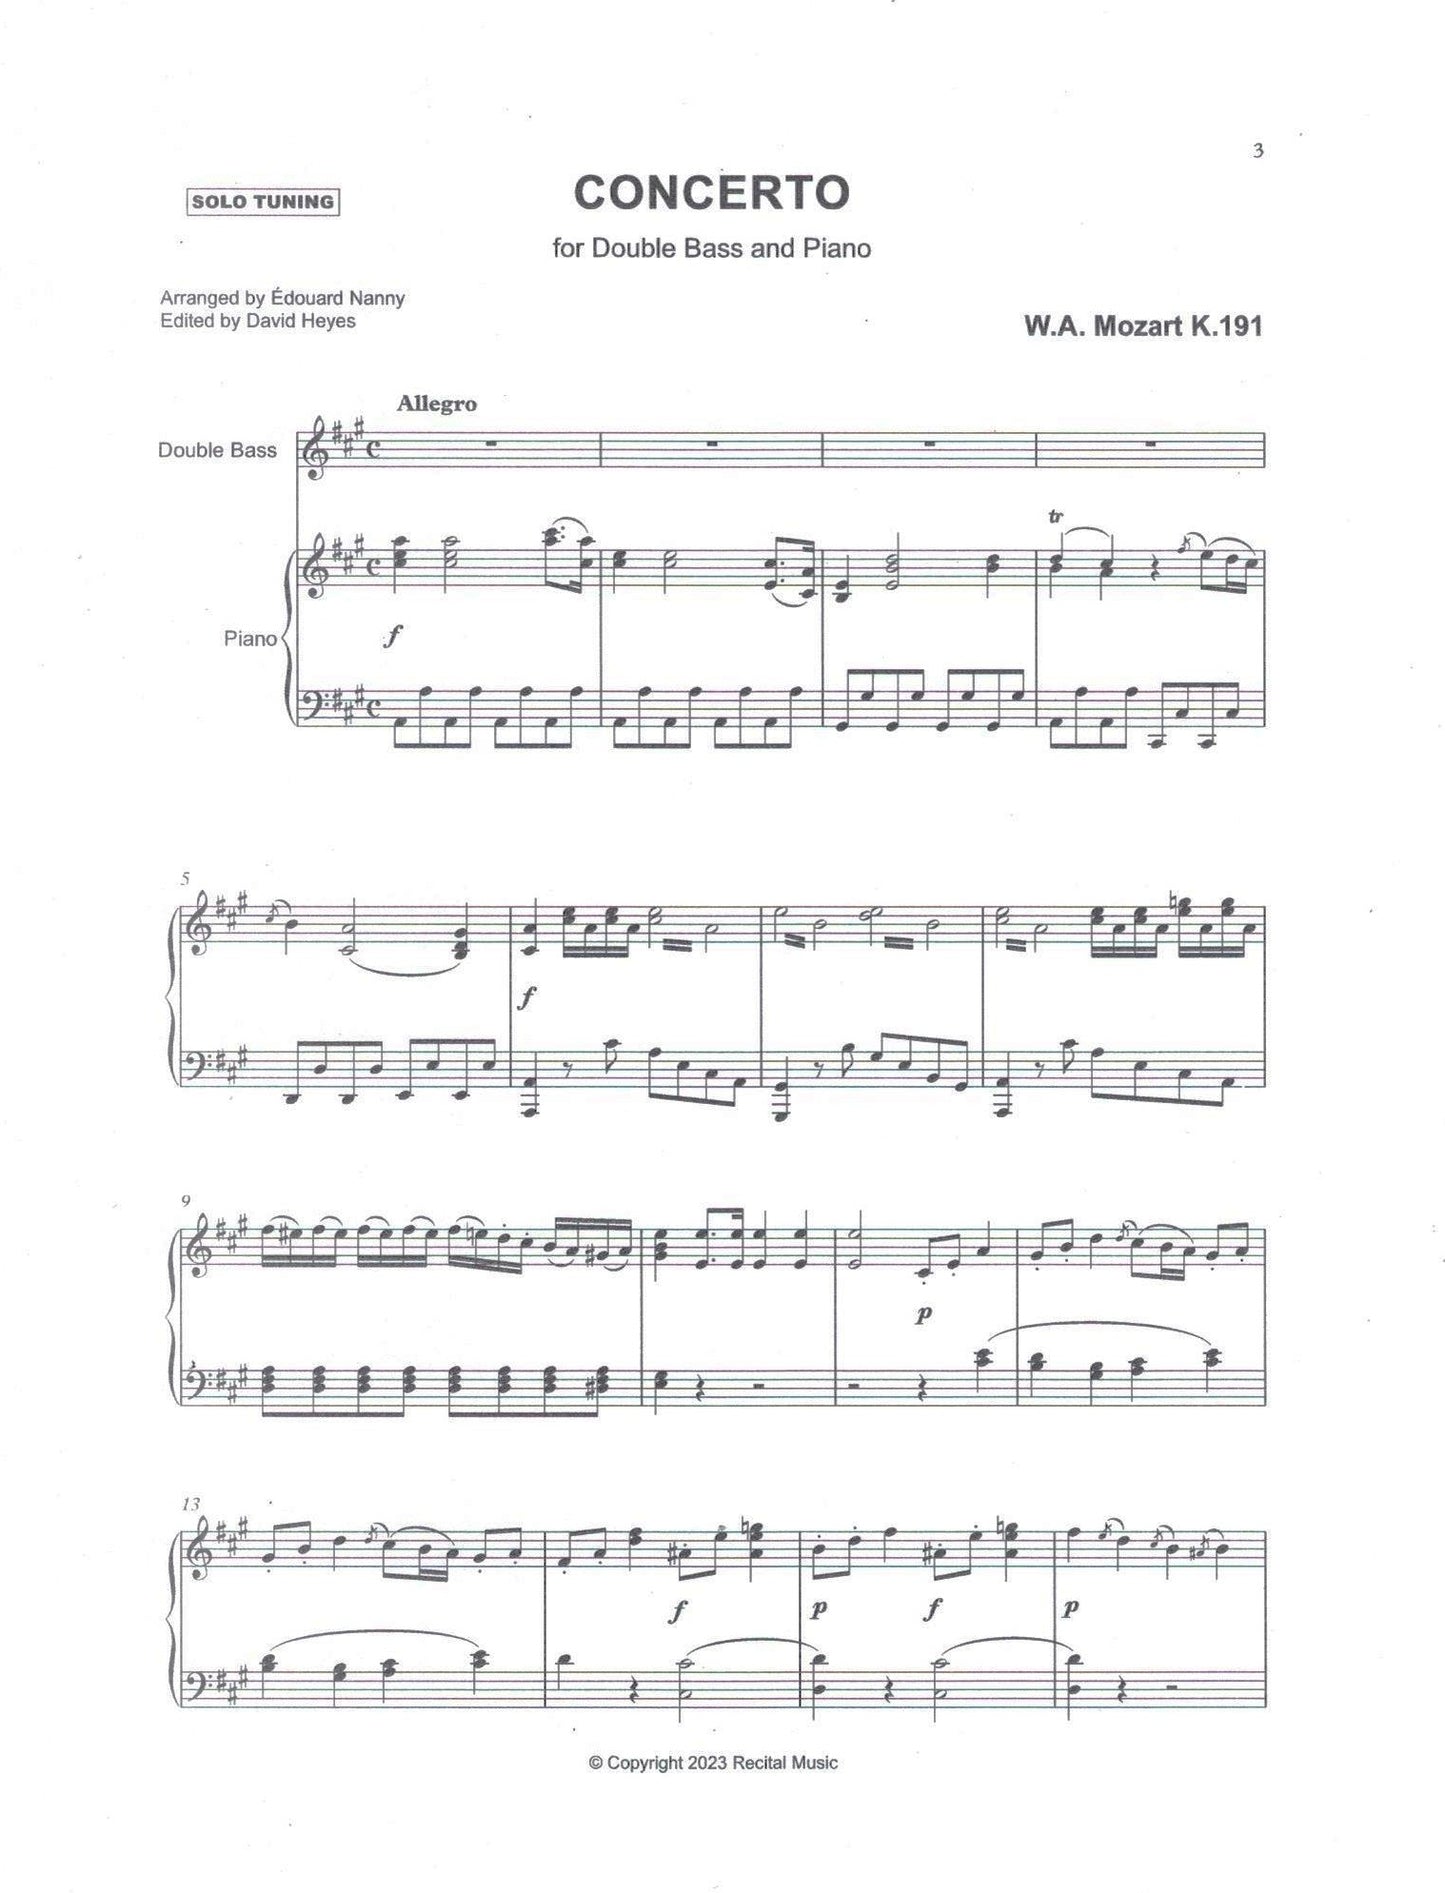 Mozart: Concerto for double bass & piano (originally for bassoon) arr. by Édouard Nanny